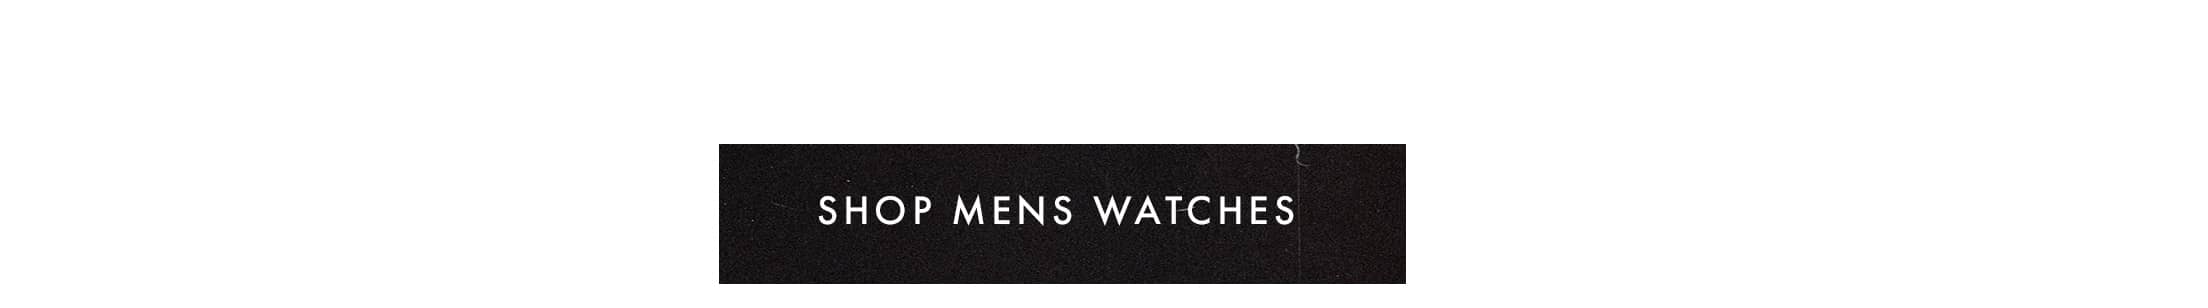 Shop Mens Watches